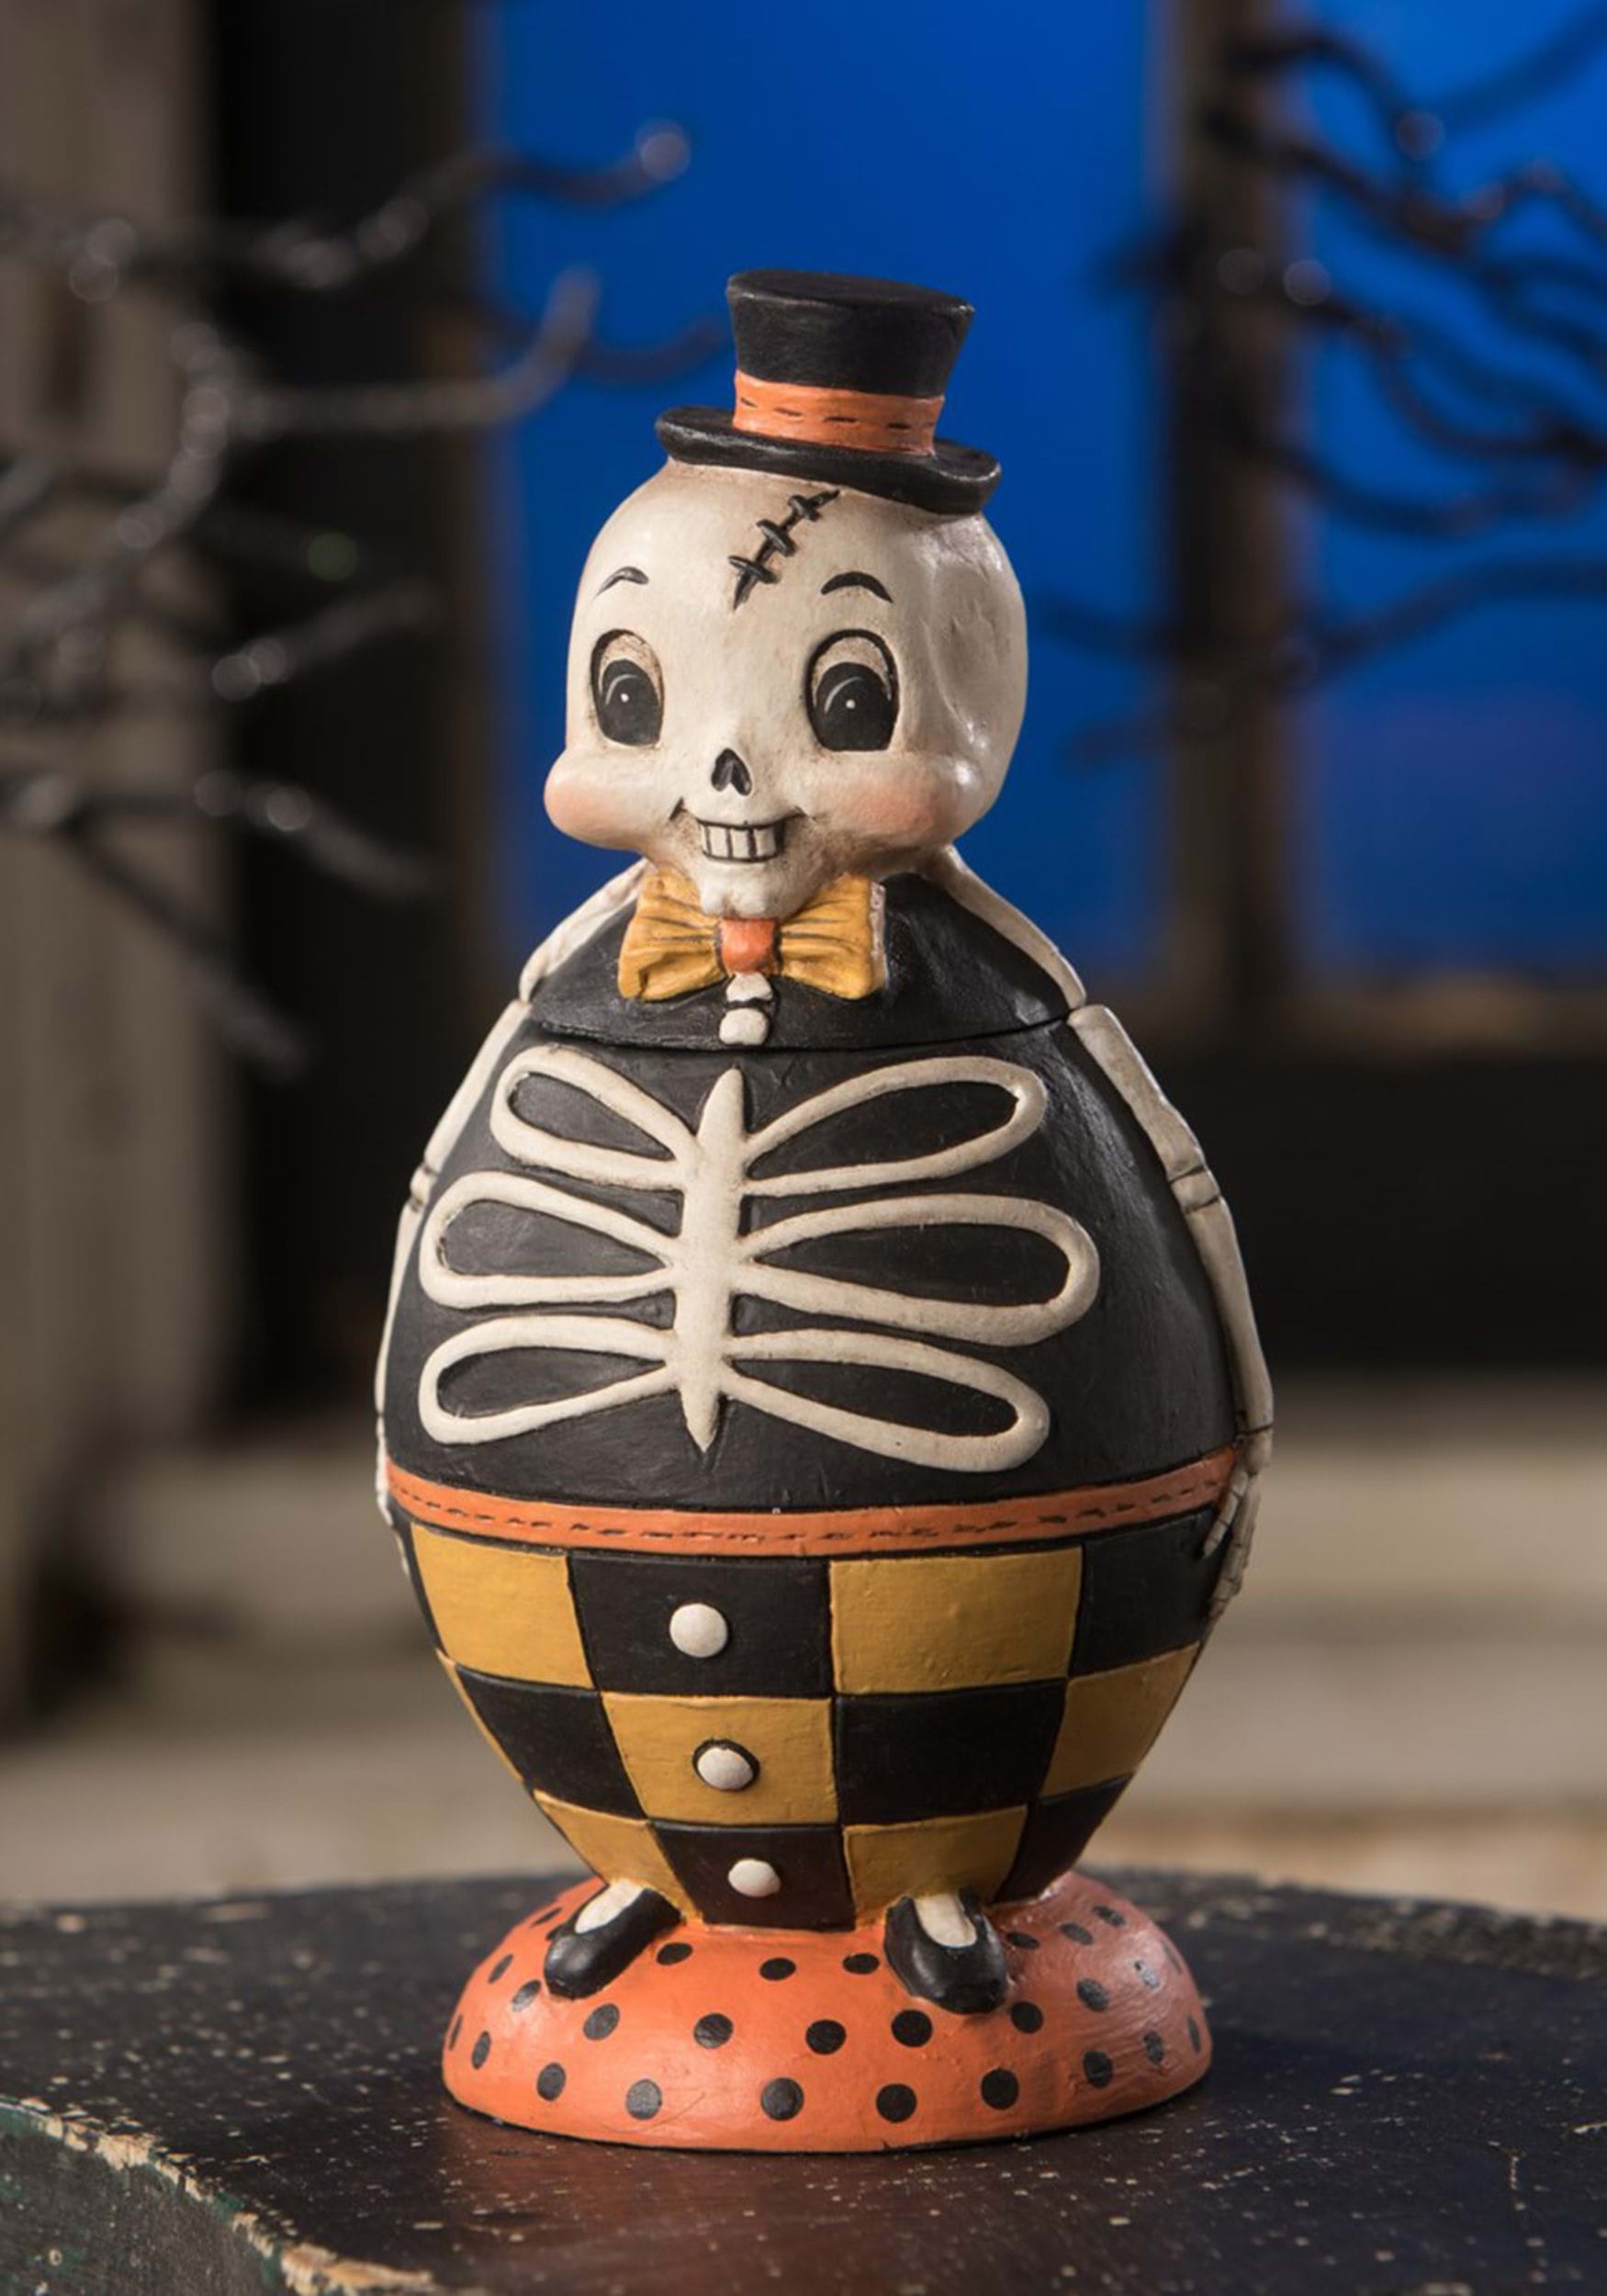 Silly Bones Spooks Decorative Jar by Johanna Parker - Spooky Halloween Decor - Mad Halloween